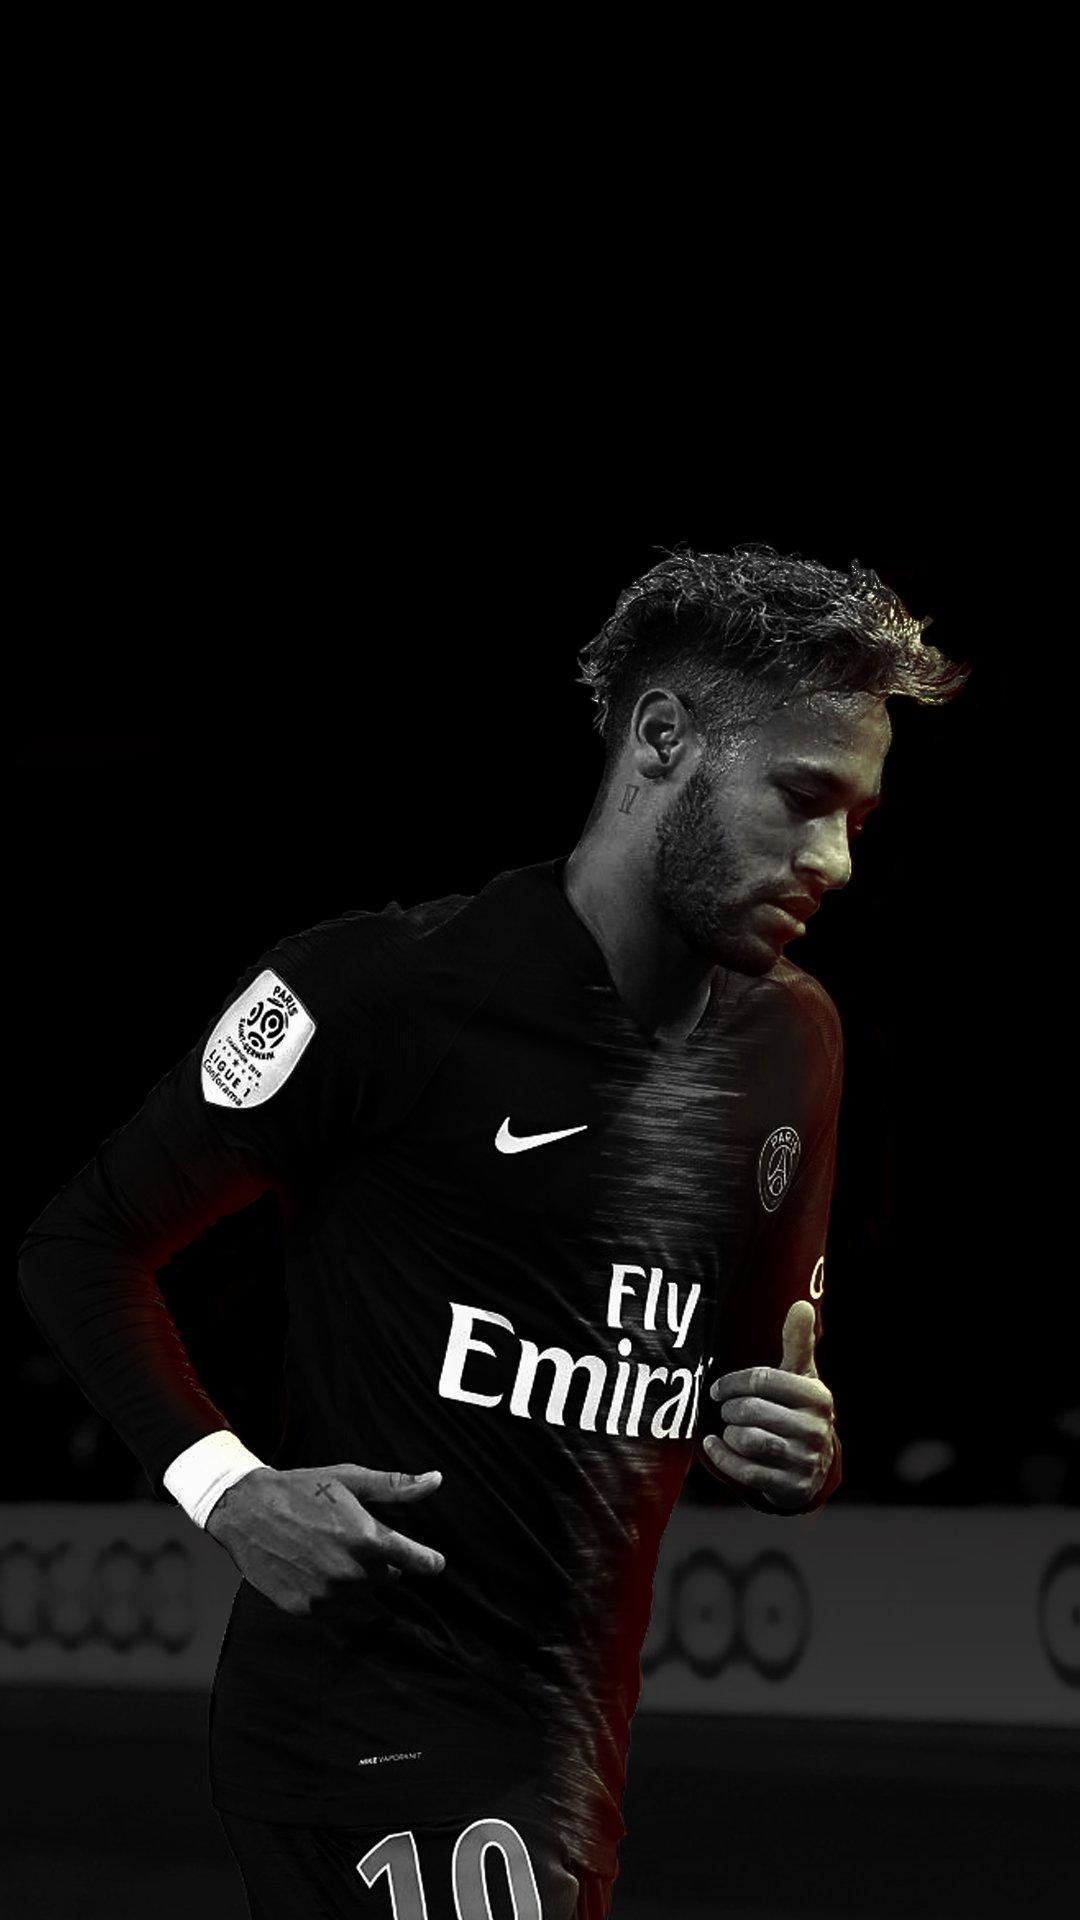 1080 x 1920 · jpeg - Neymar Background, Background, Best, Black, Neymar, Player, Wallpaper ...